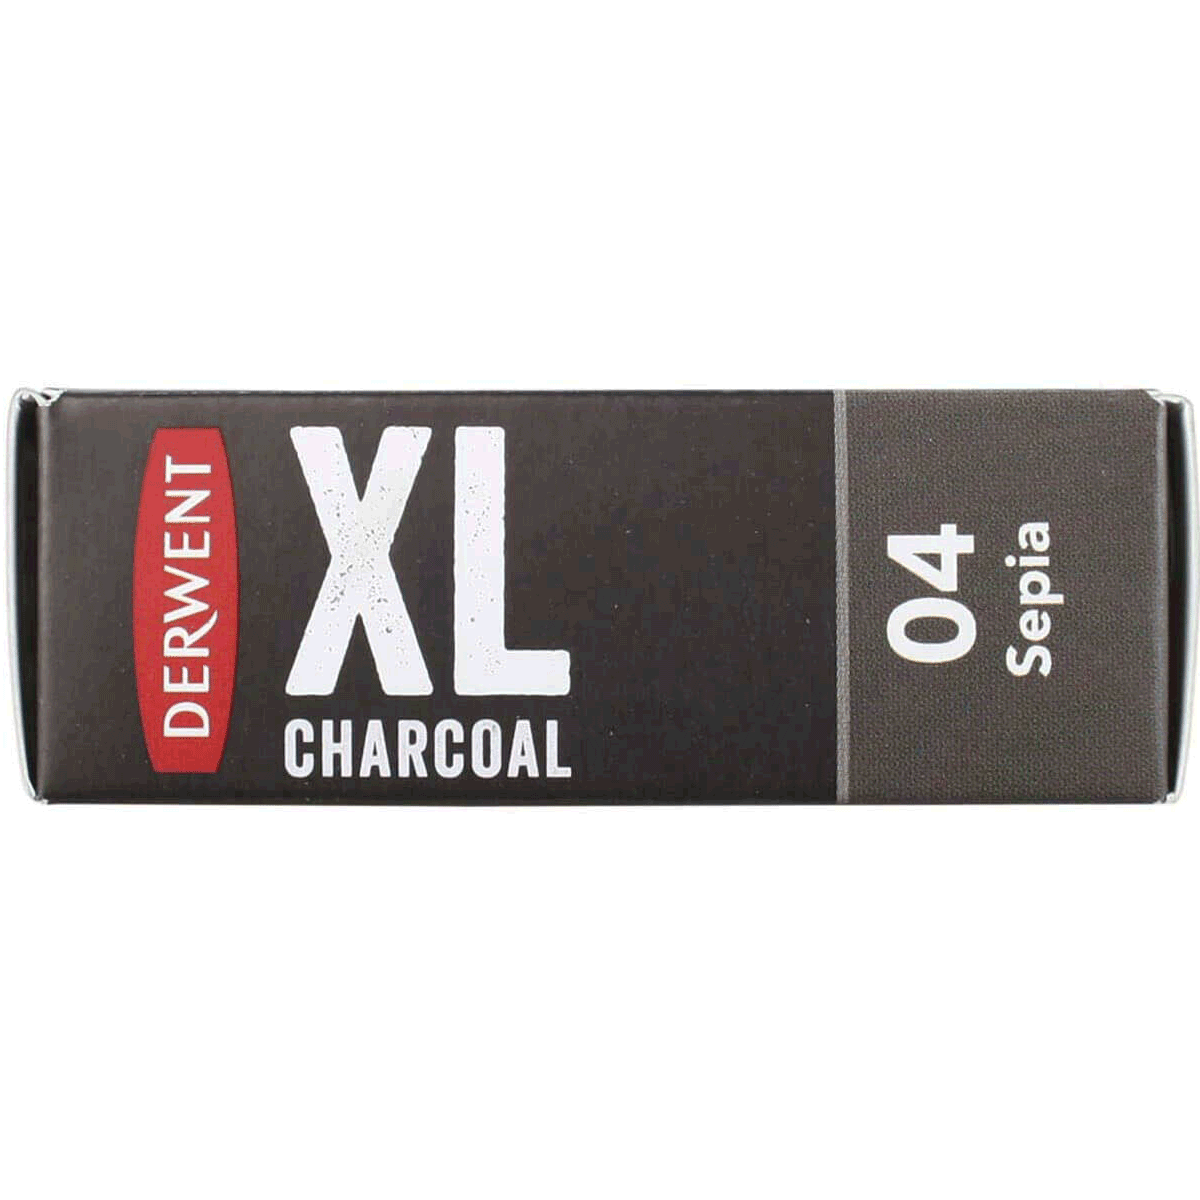 Derwent XL Charcoal Block Sepia 04